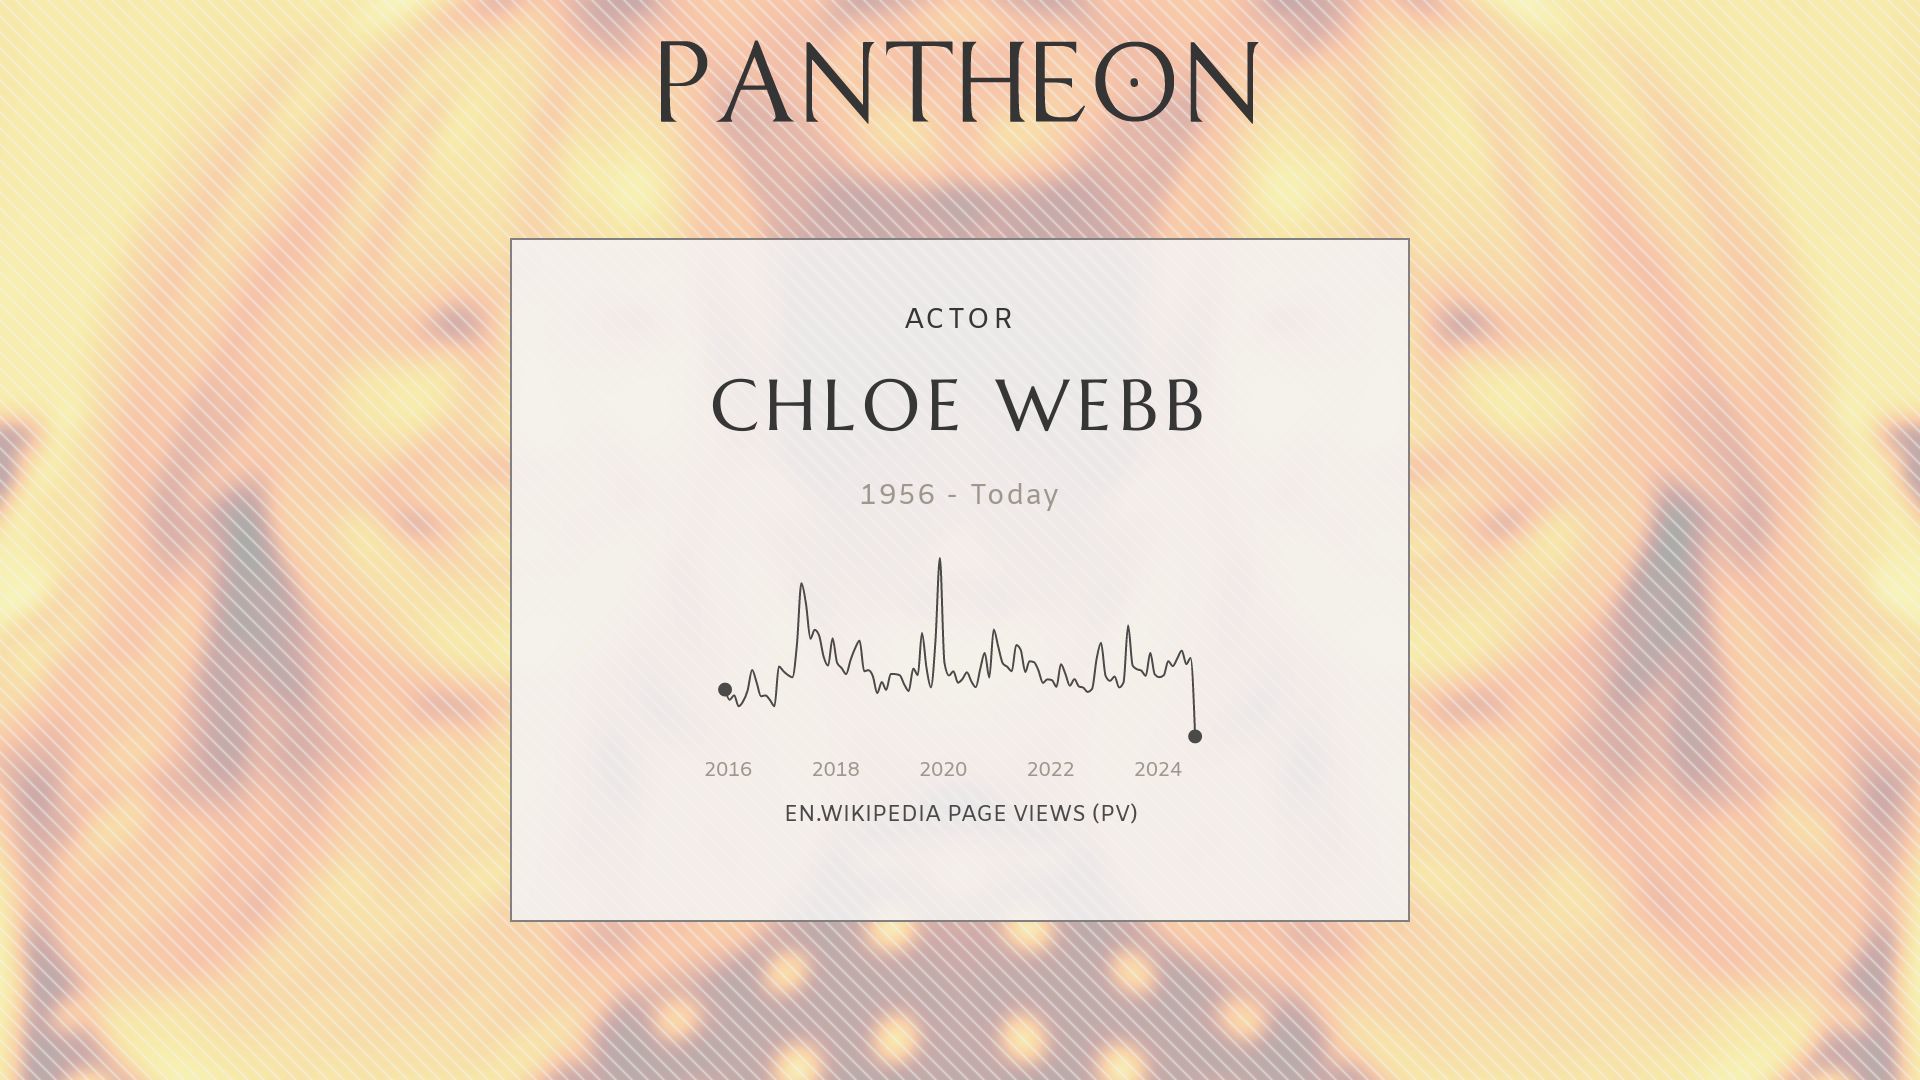 Chloe webb actress Rotten Tomatoes: